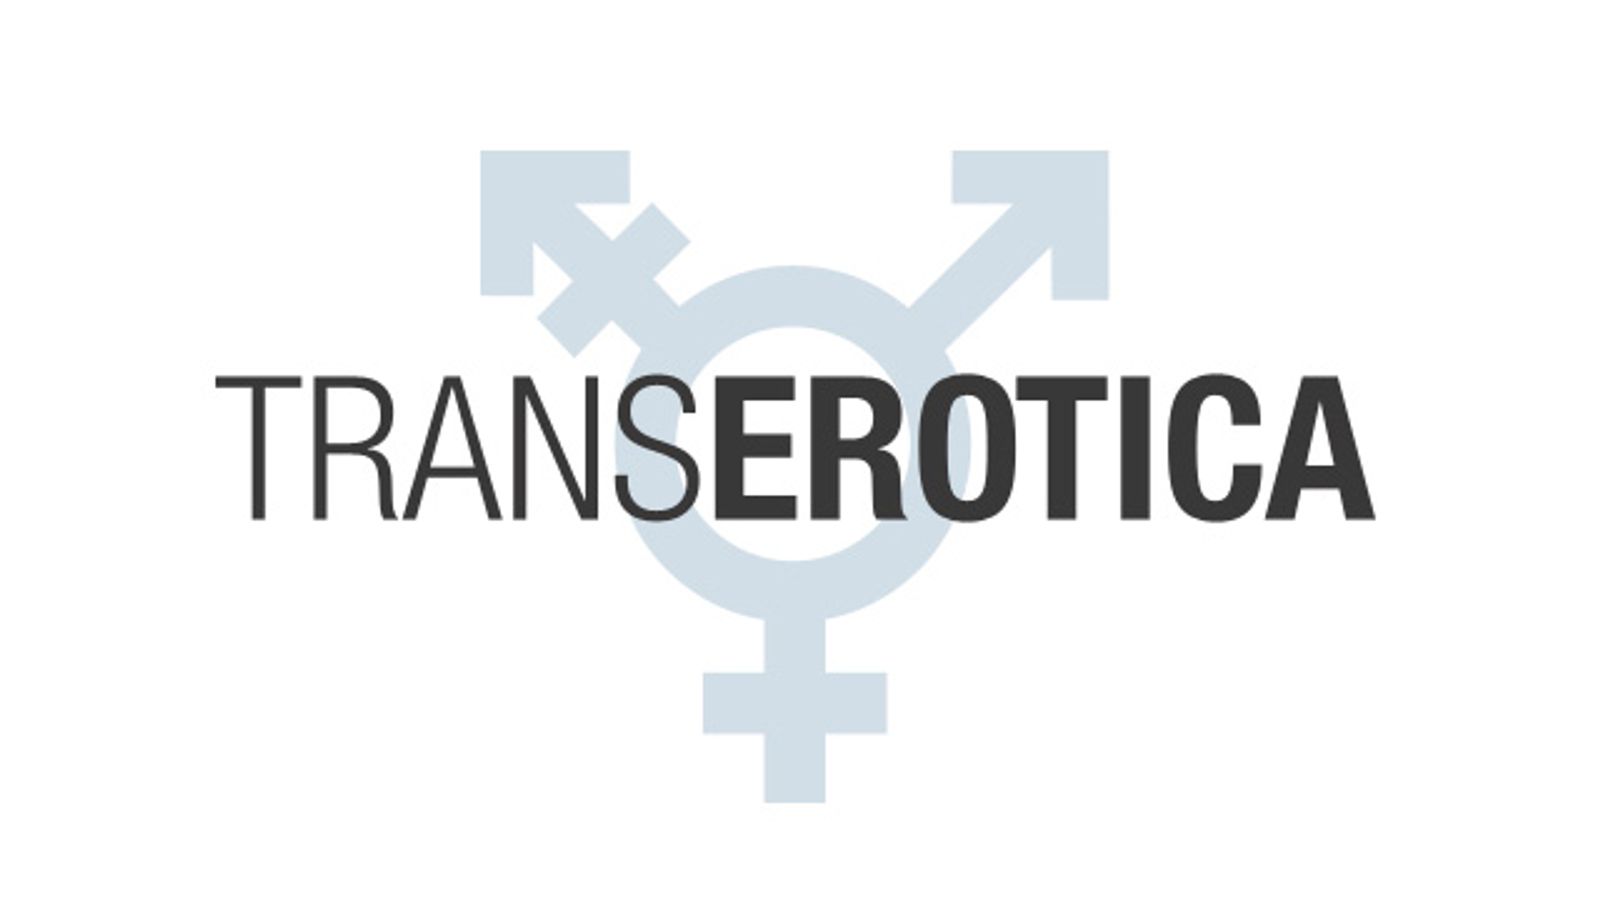 TransErotica.com Launches with Jessy Dubai and Tyra Scott